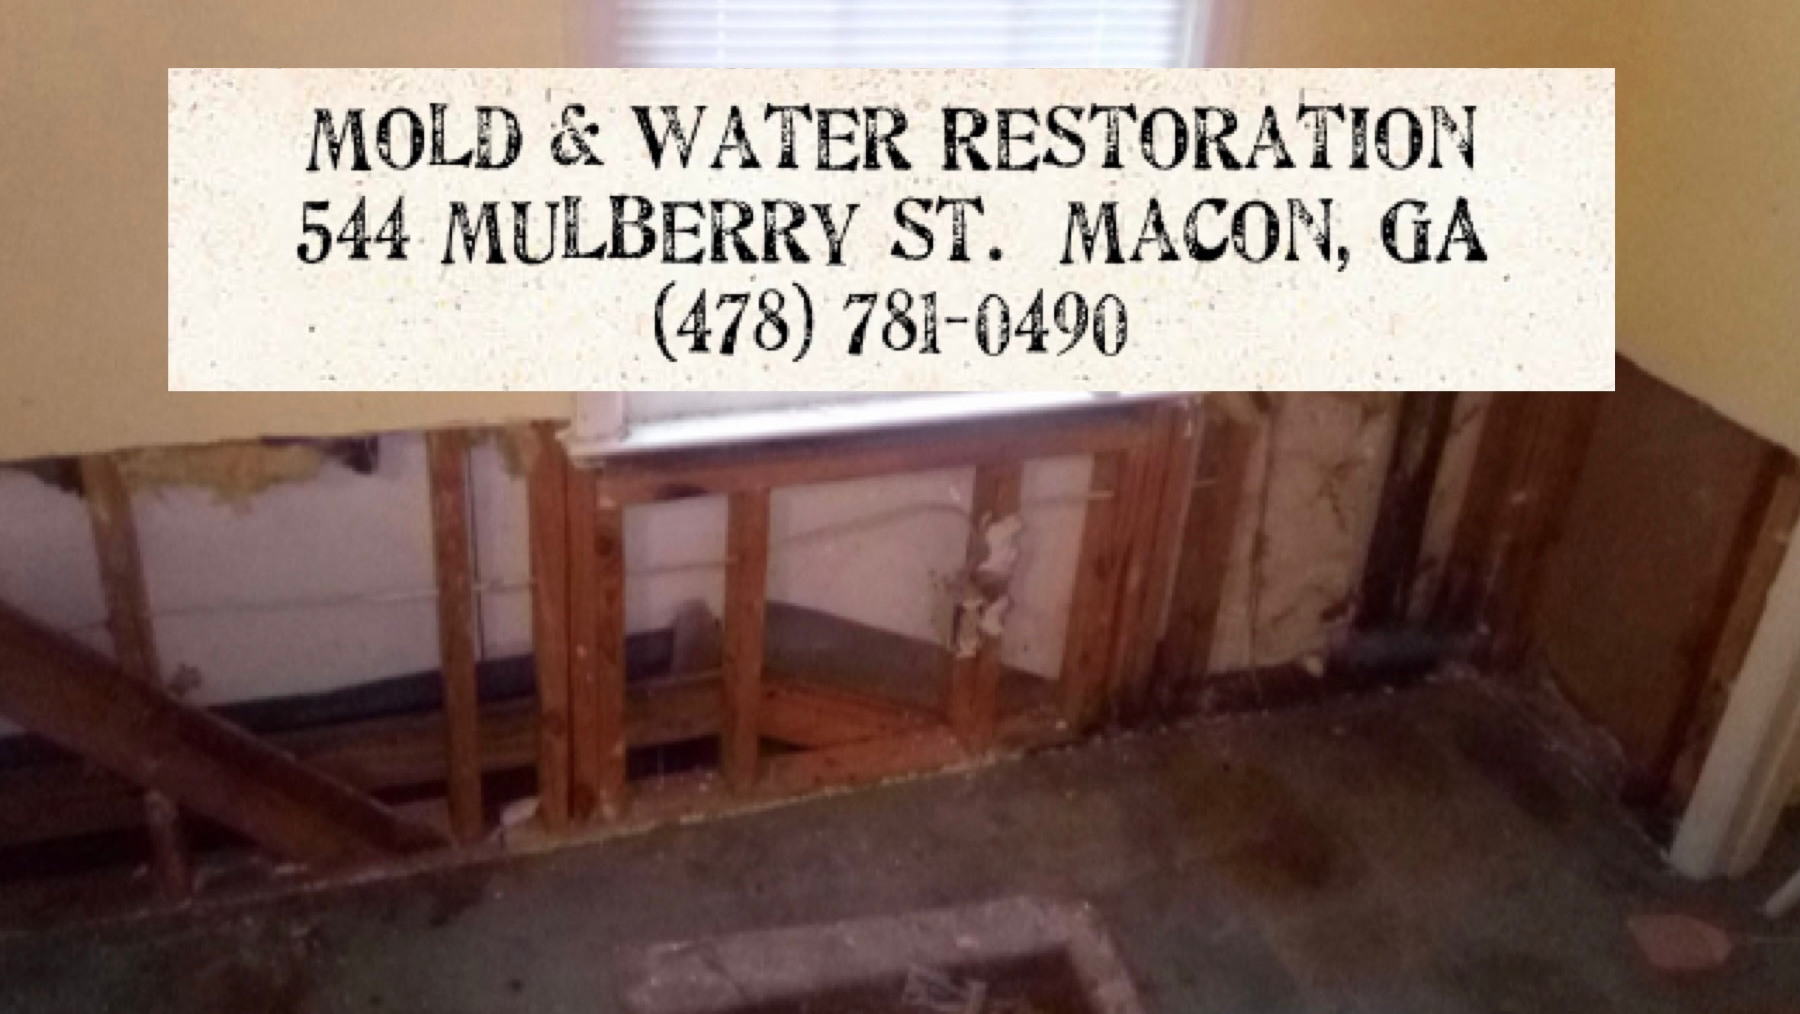 Mold & Water Restoration